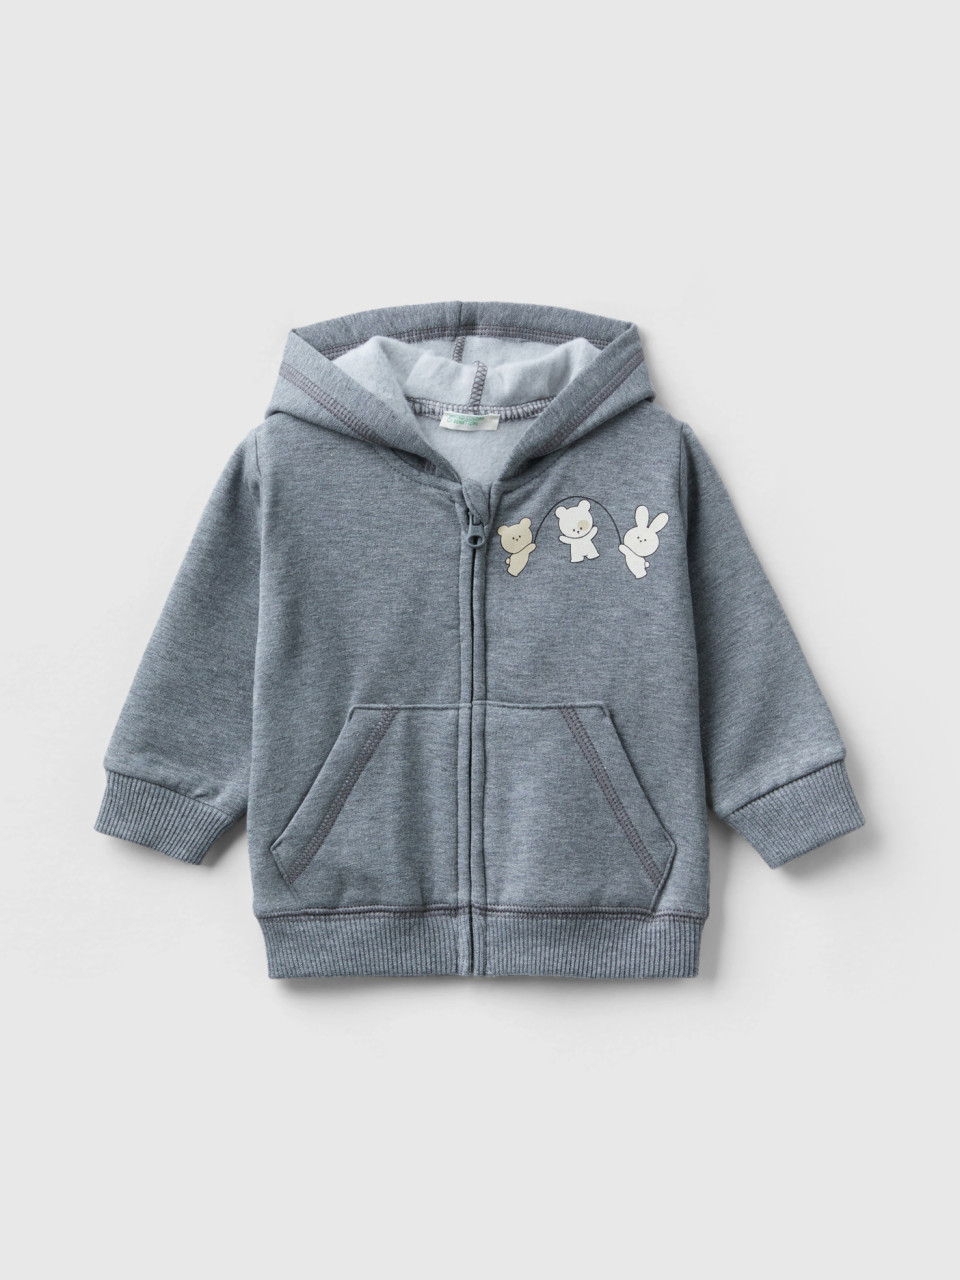 Benetton, Warm Sweatshirt With Animal Print, Gray, Kids